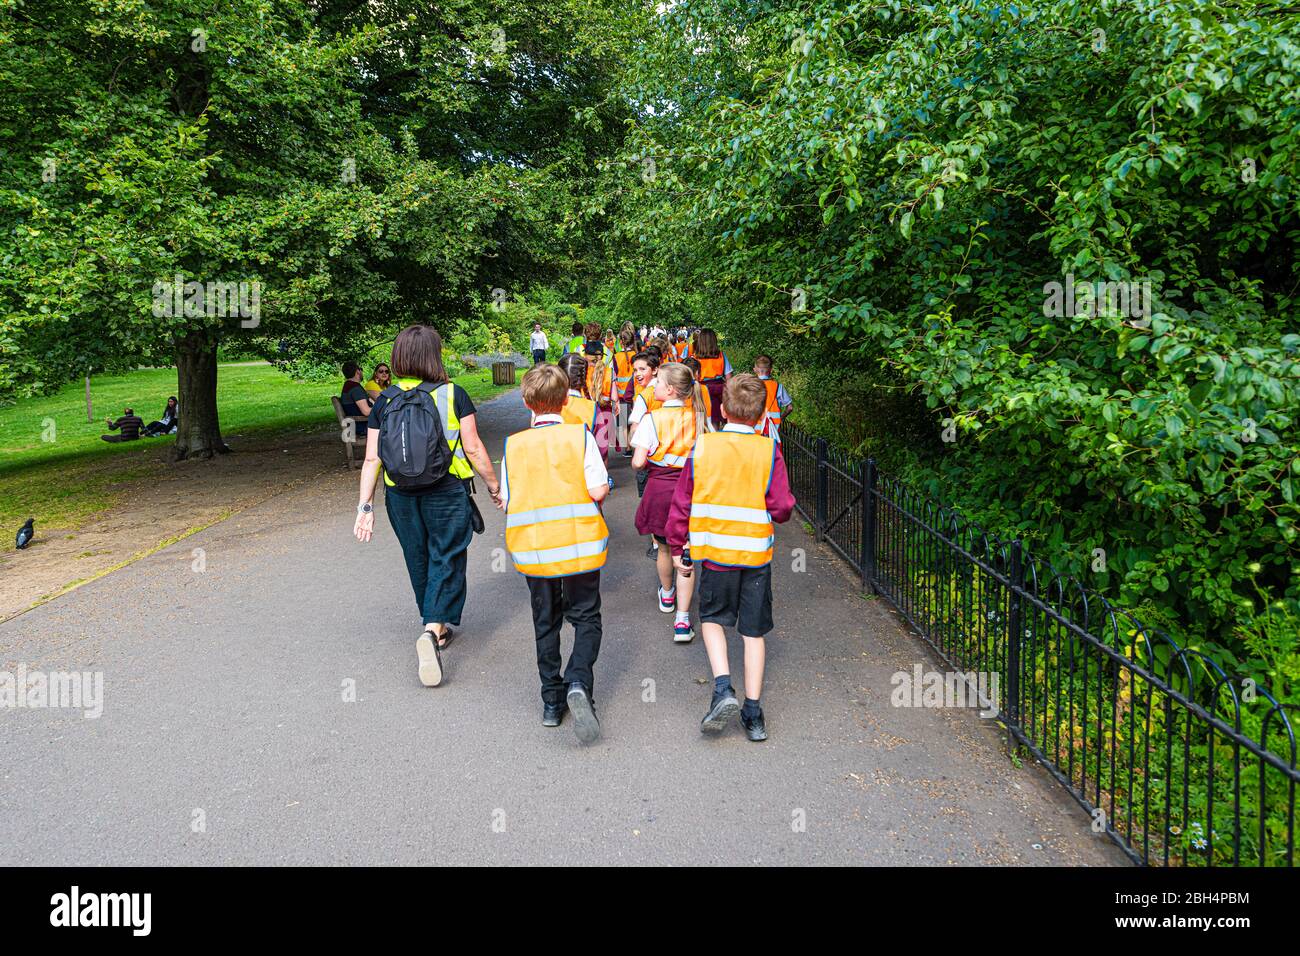 London, UK - June 21, 2018: St James Park green summer with many people school children walking on sidewalk road on field trip in vests Stock Photo